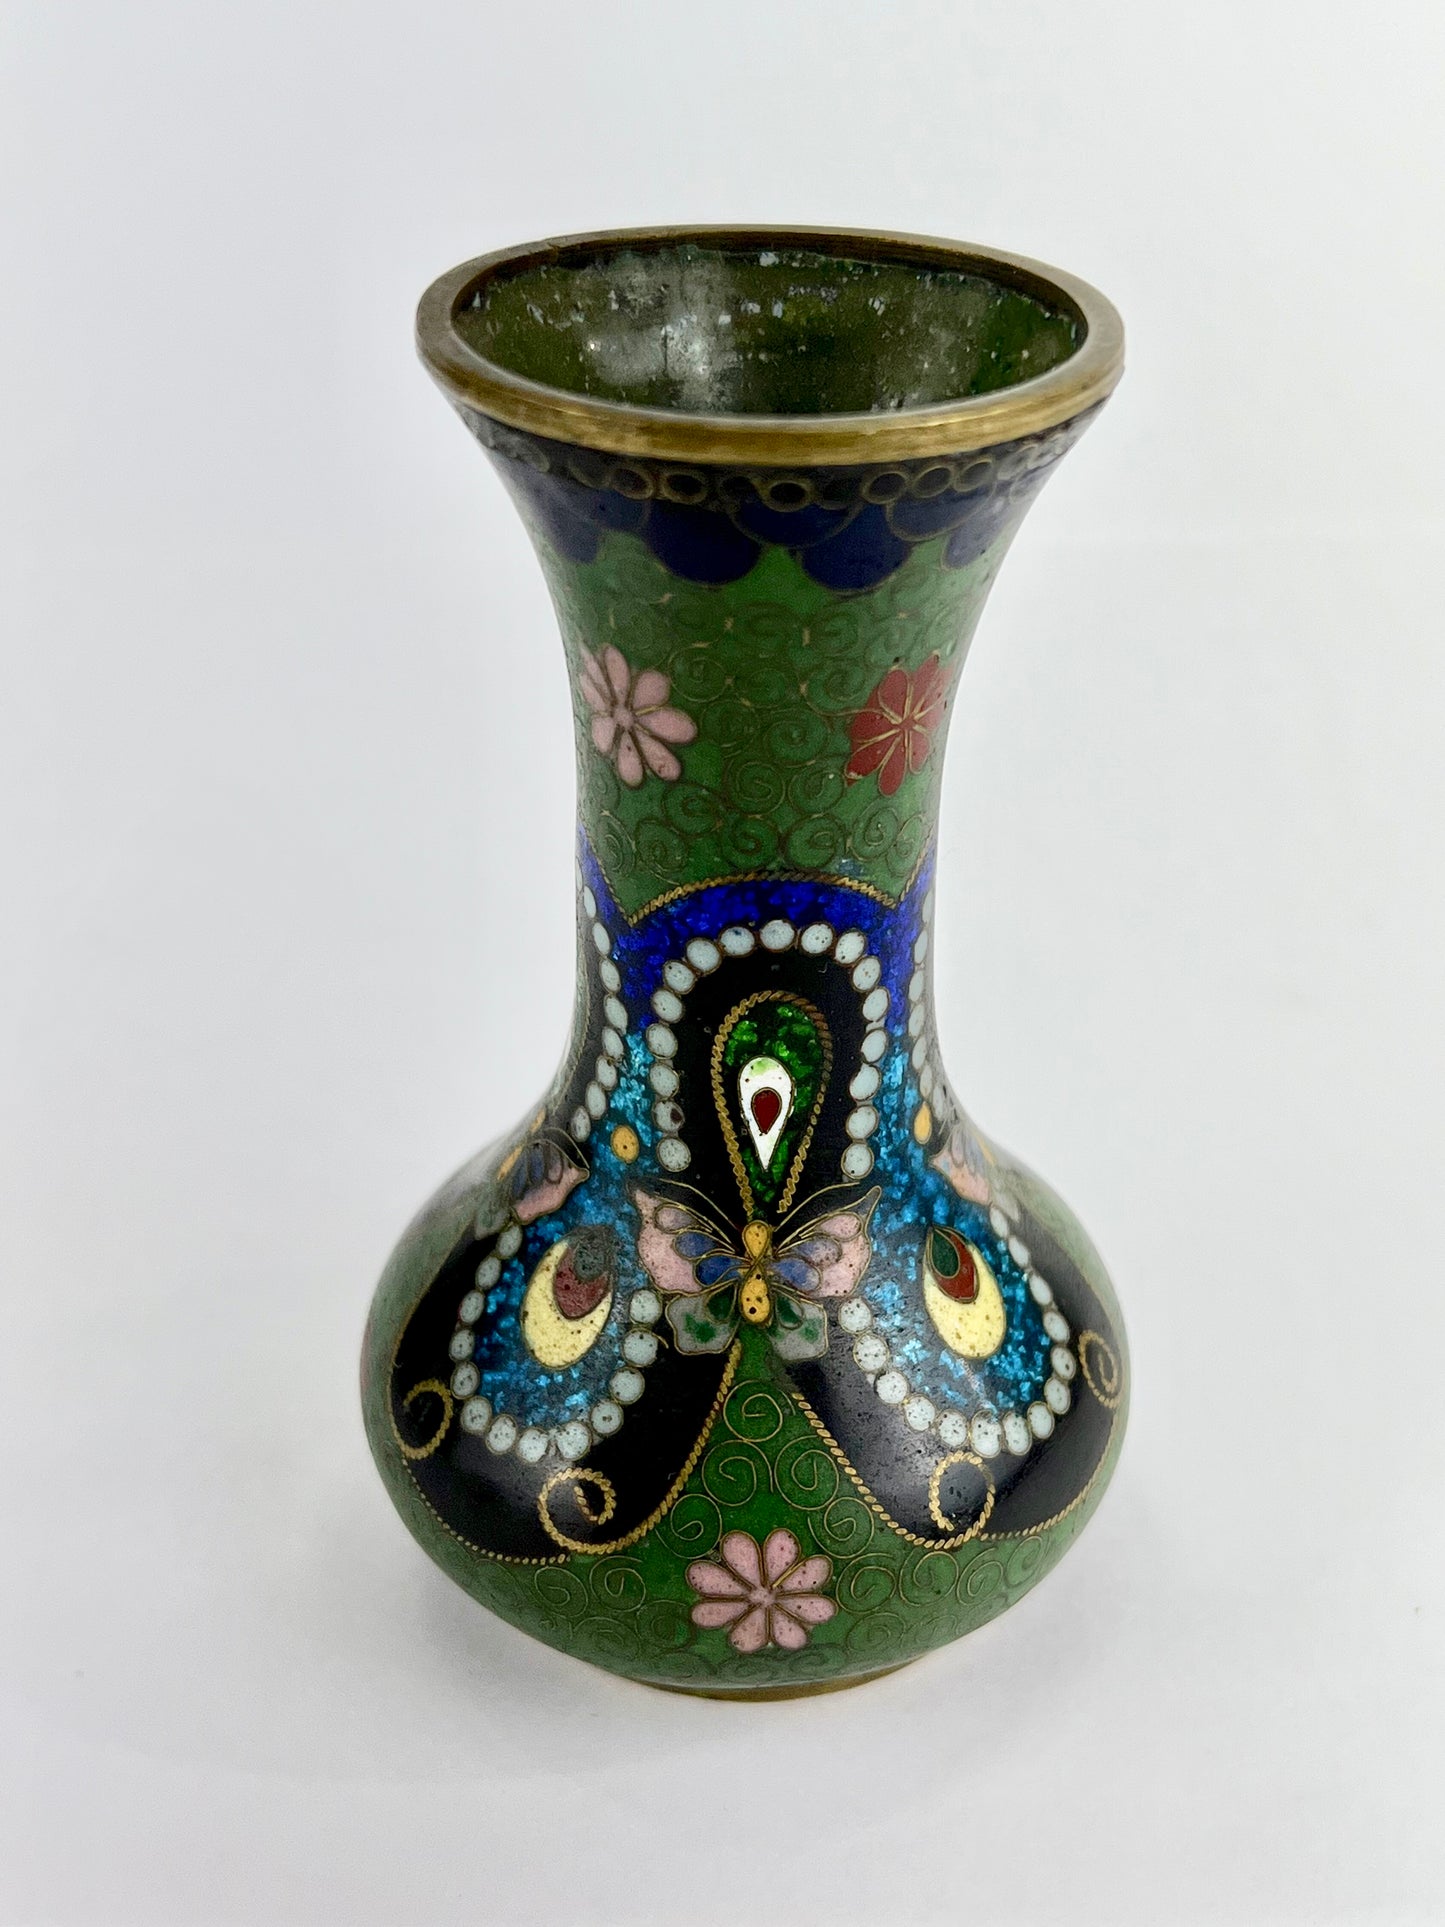 Antique Japanese Meiji Era (late 1800's) Cloisonné Vase Green w/ Butterflies 3.5”